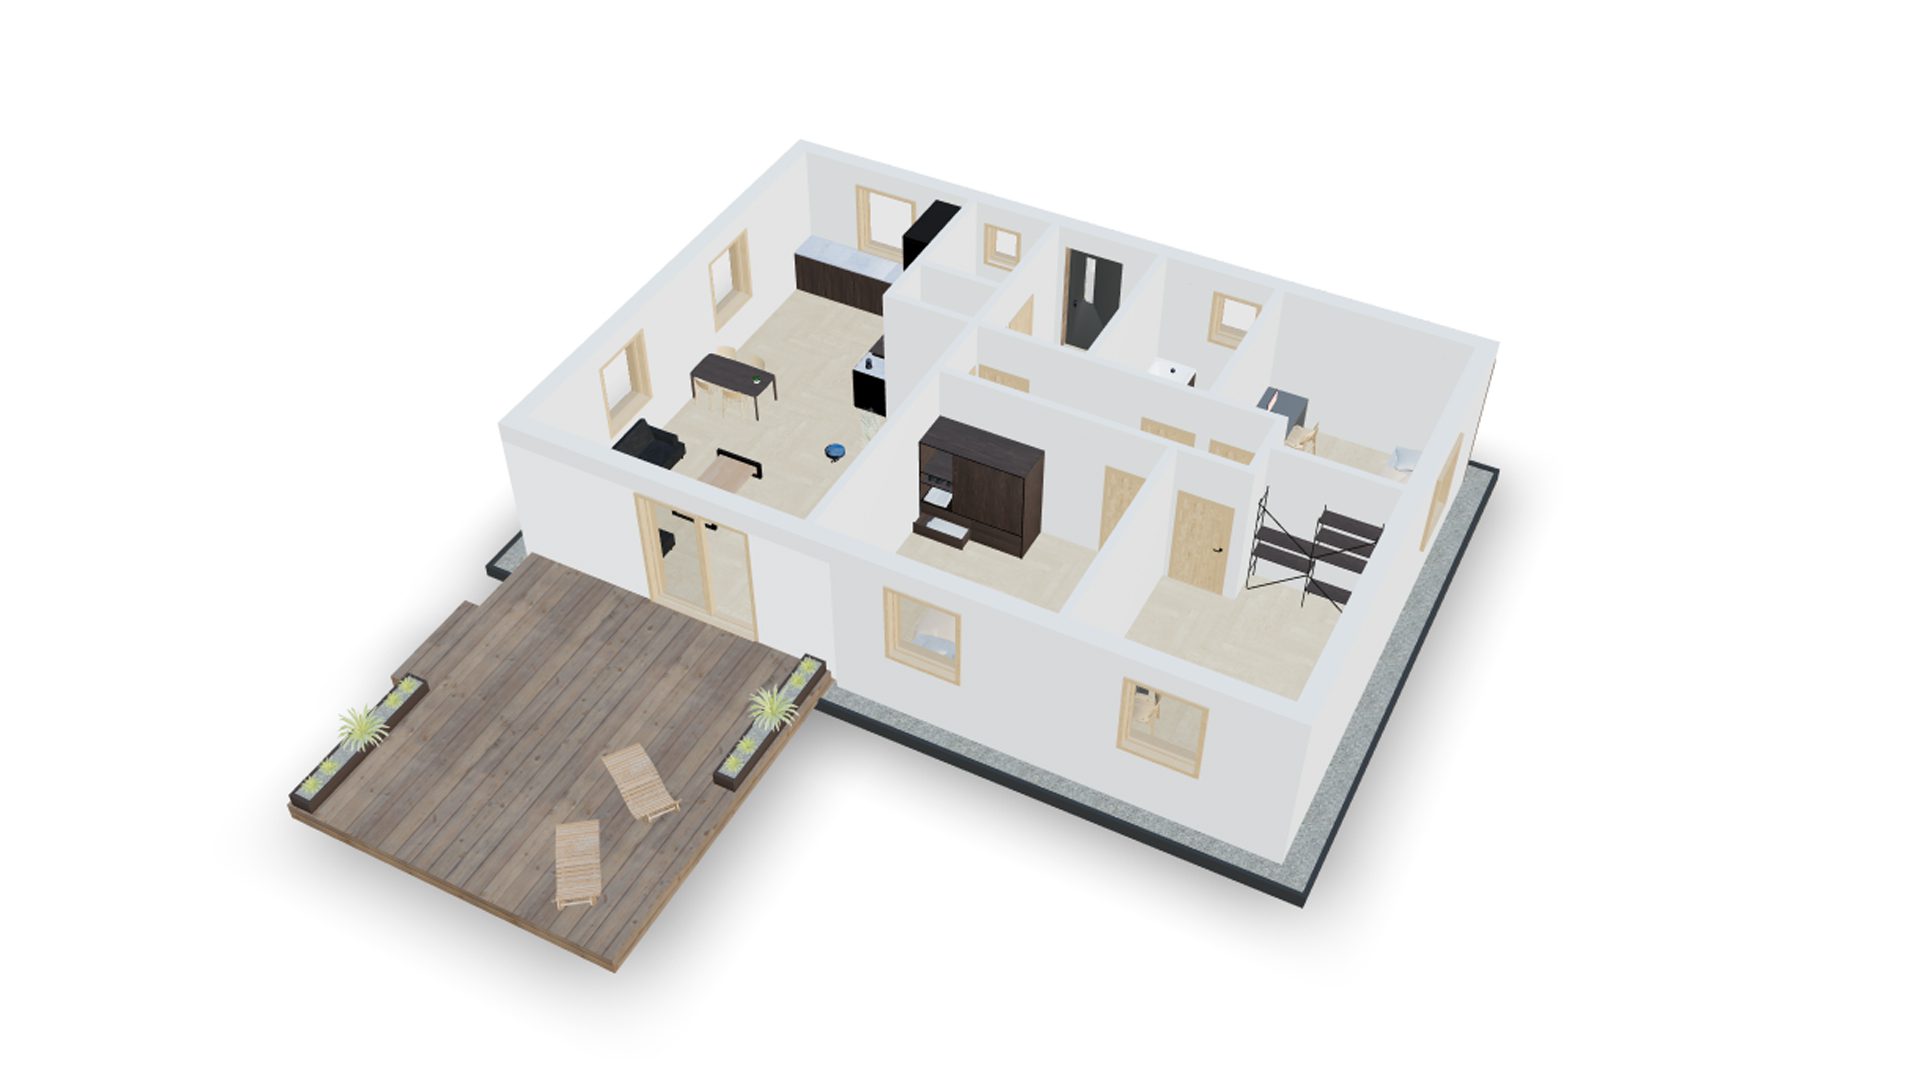 DYNAMICKY MODEL HOUSE 98 – Archevio